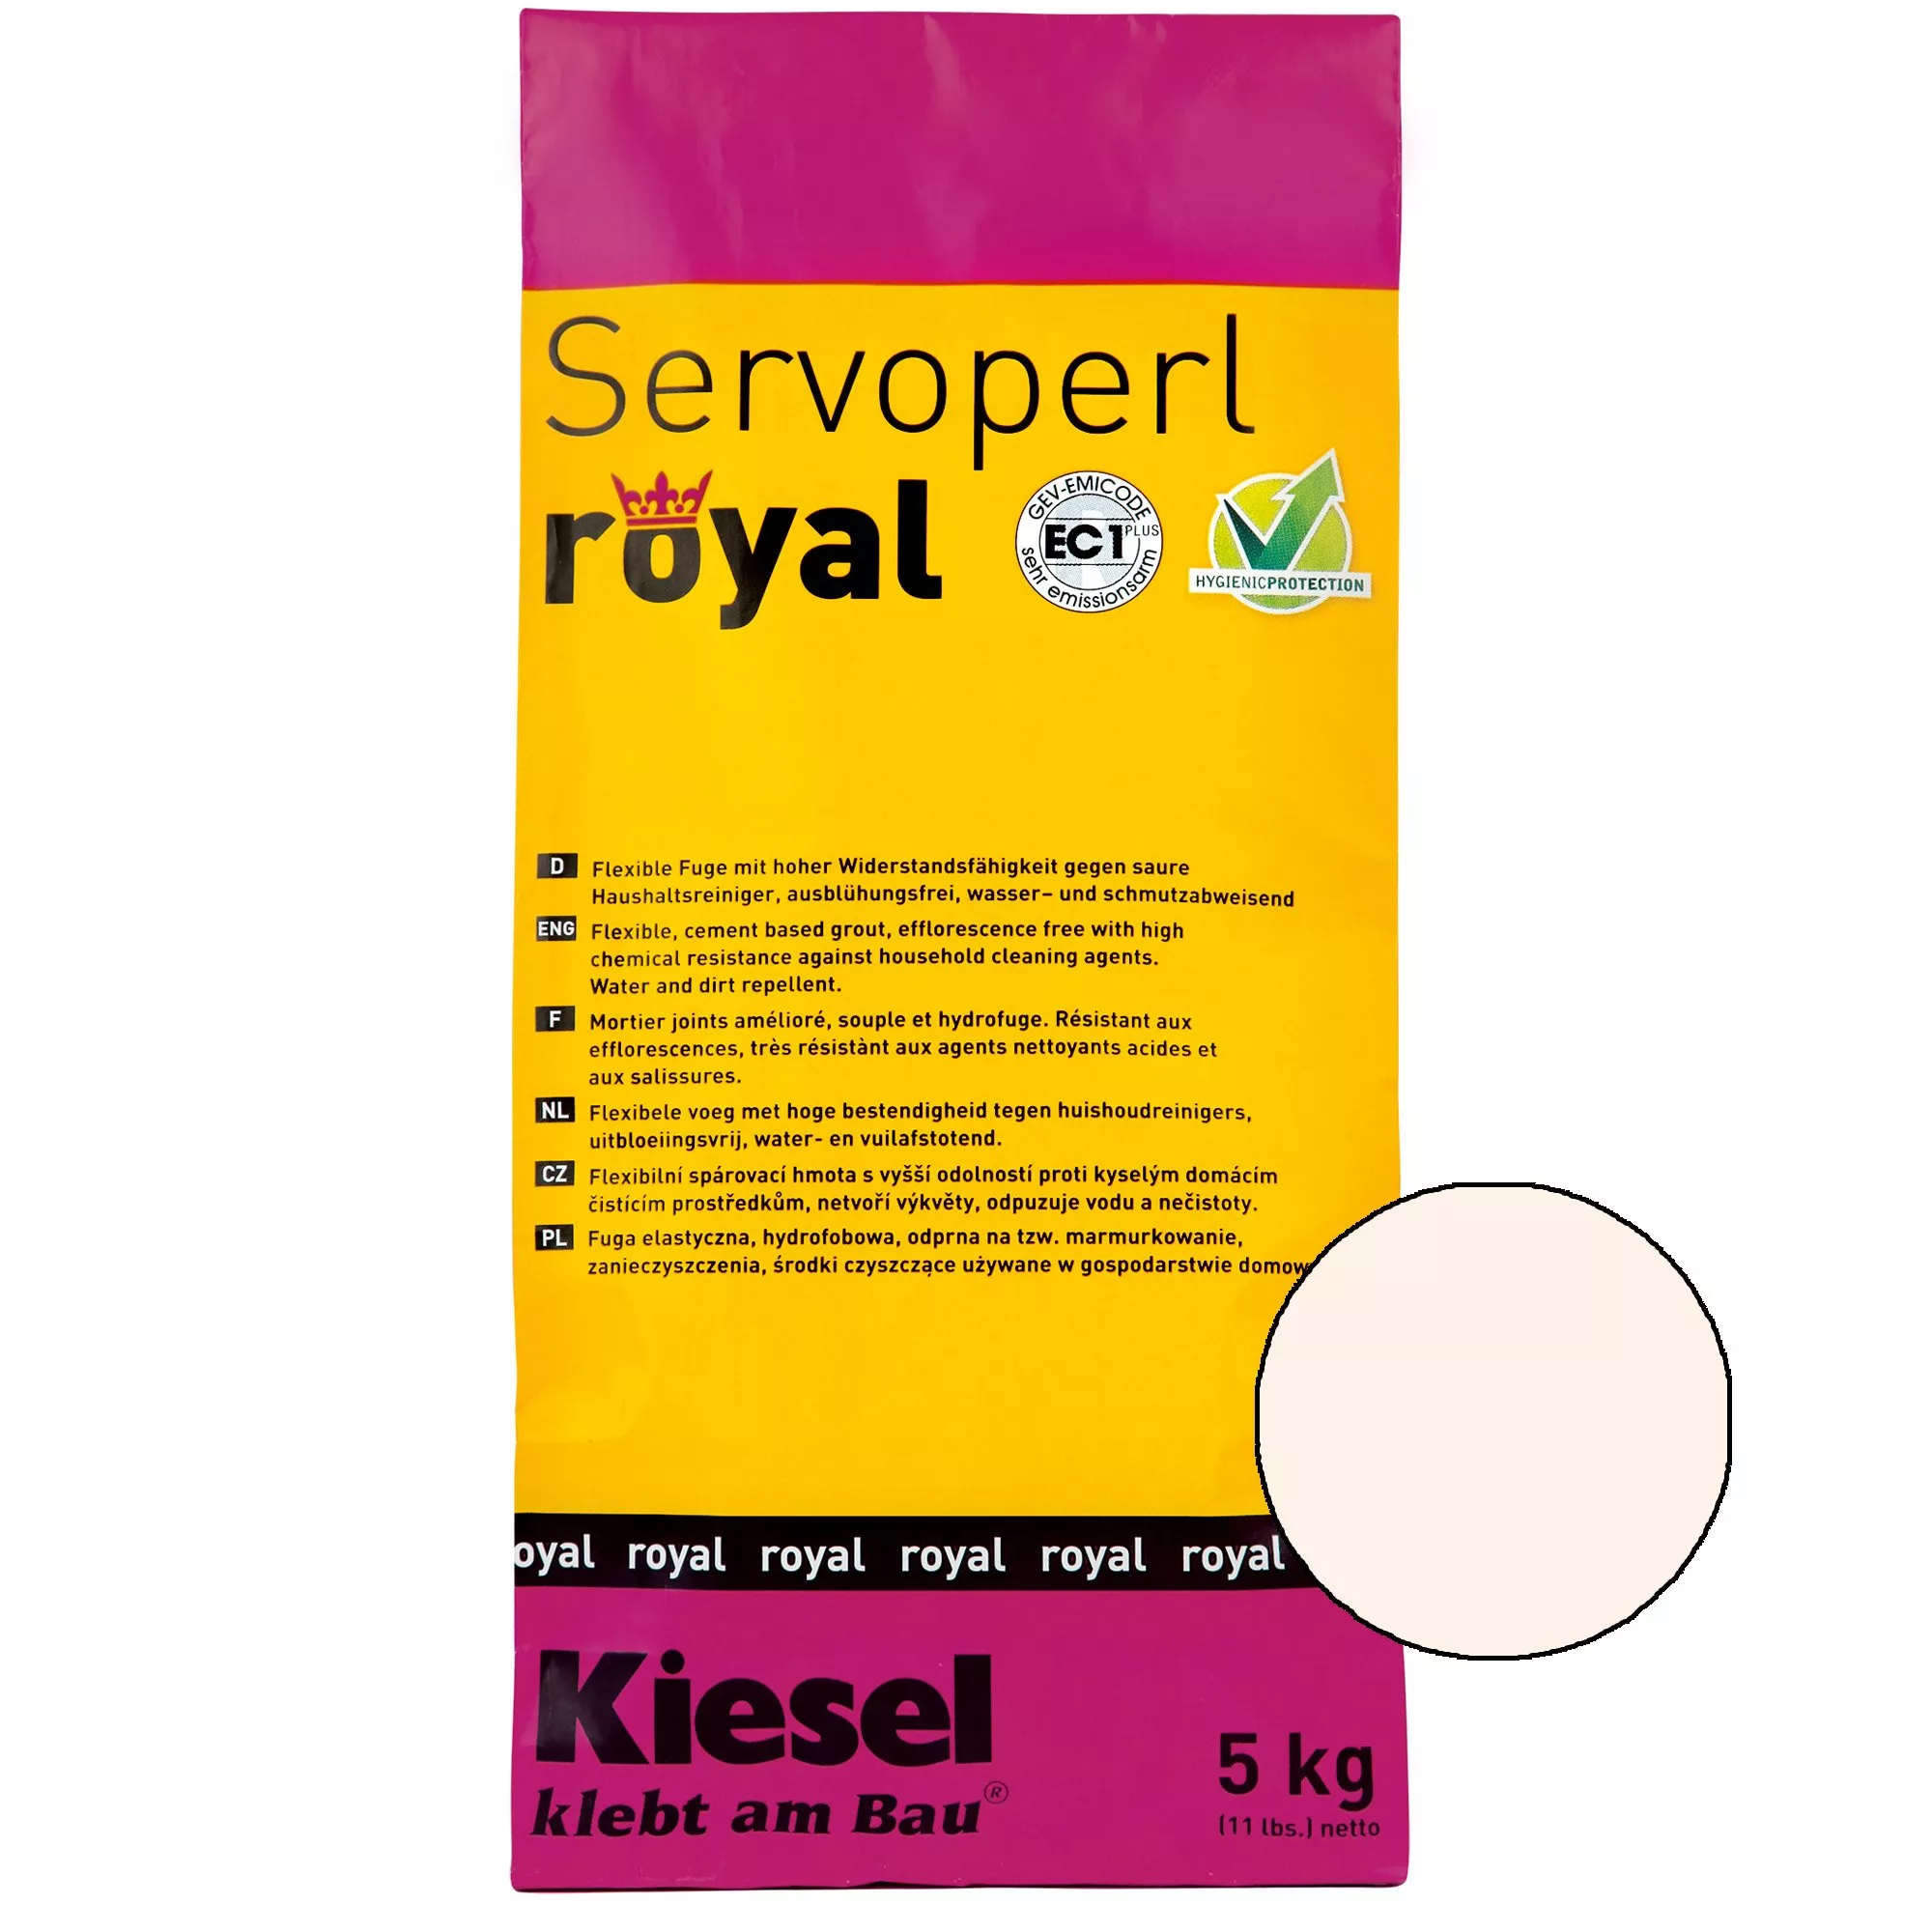 Kiesel Servoperl royal - Flexible, water- and dirt-repellent joint (5KG Pergamon)